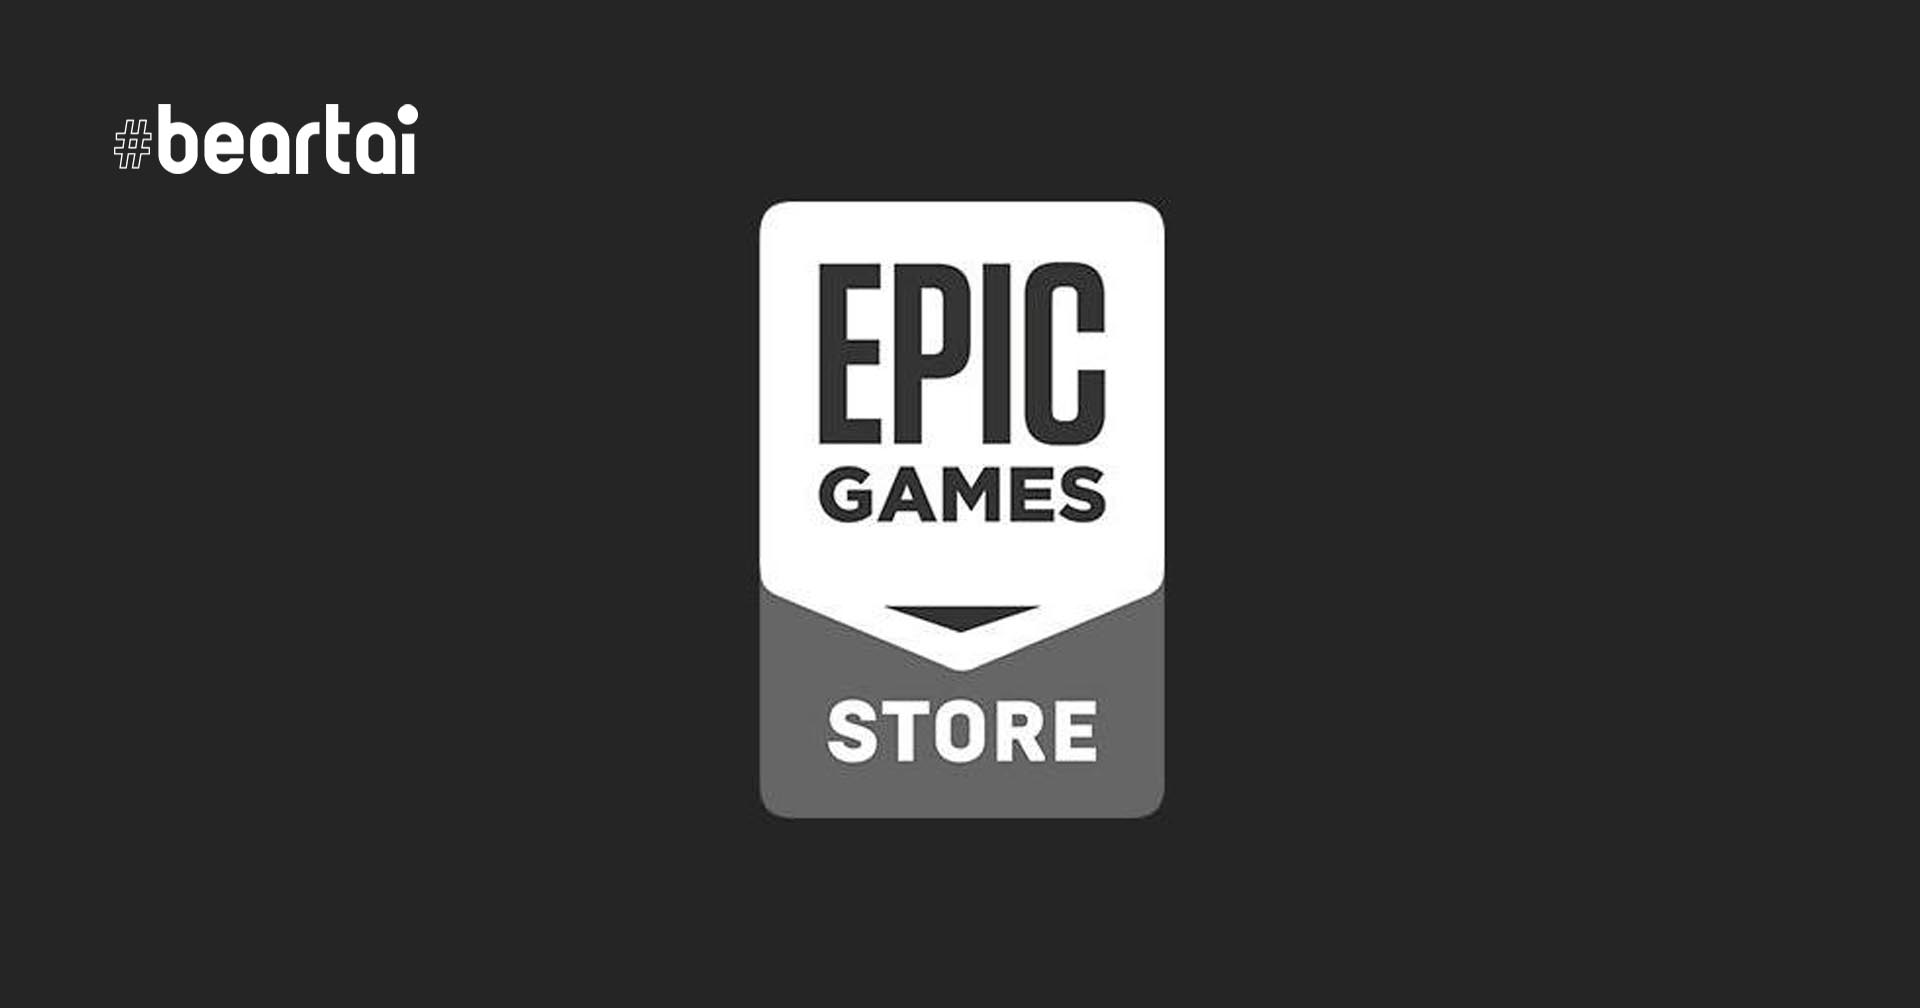 Epic Games Store ให้สัญญาว่าจะเพิ่มเนื้อหา Exclusives ให้มากขึ้นภายใน 2 ปีนับจากนี้